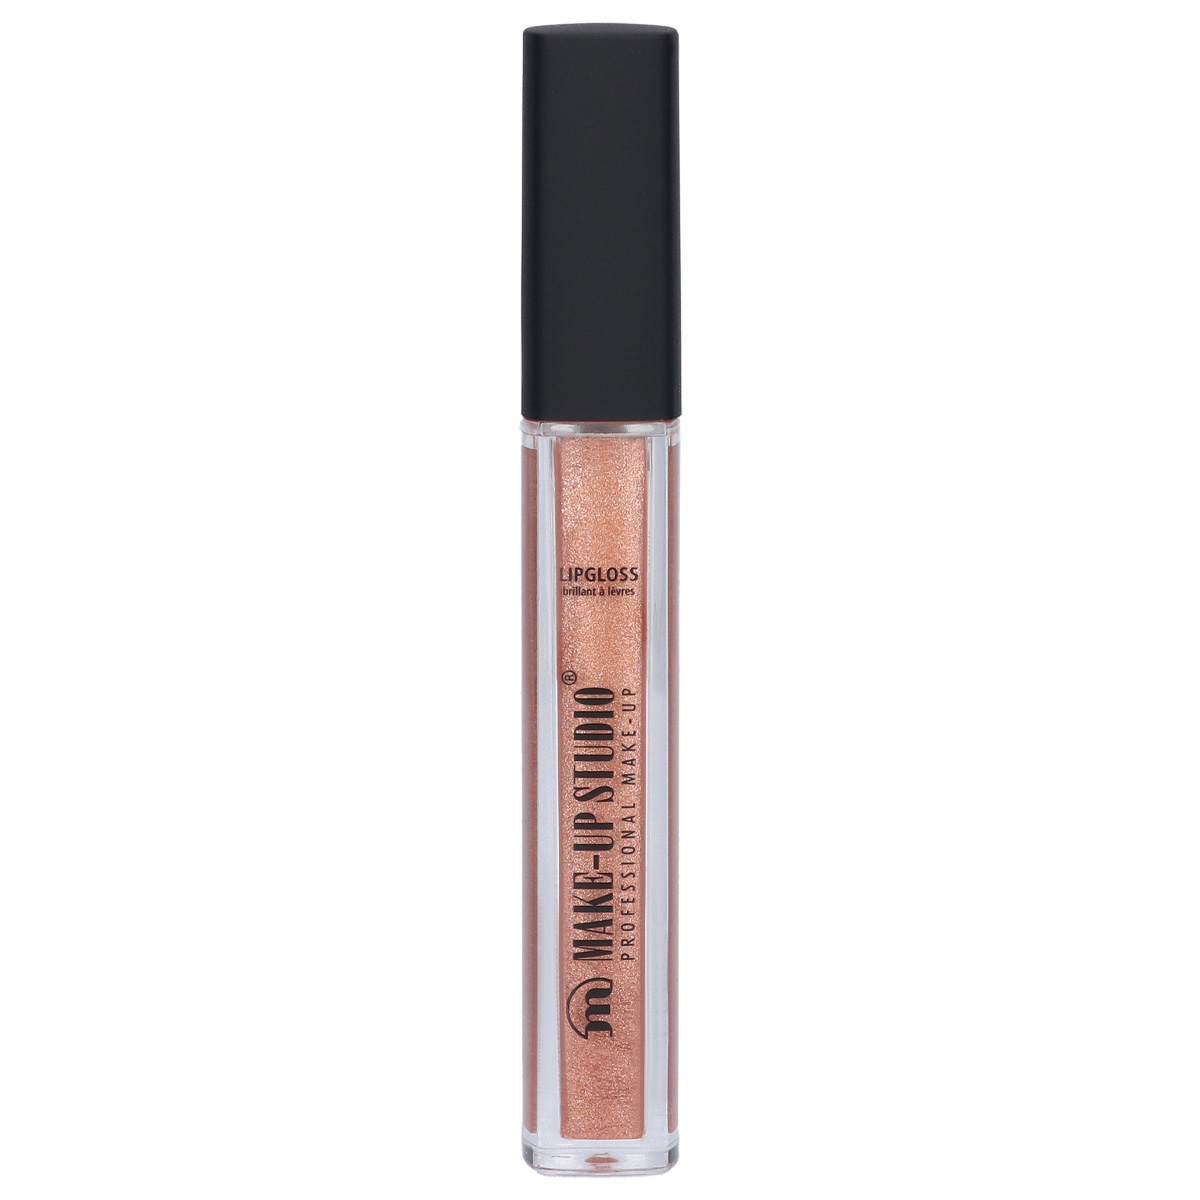 Make-up Studio Paint Gloss Lipgloss - Sunny Copper